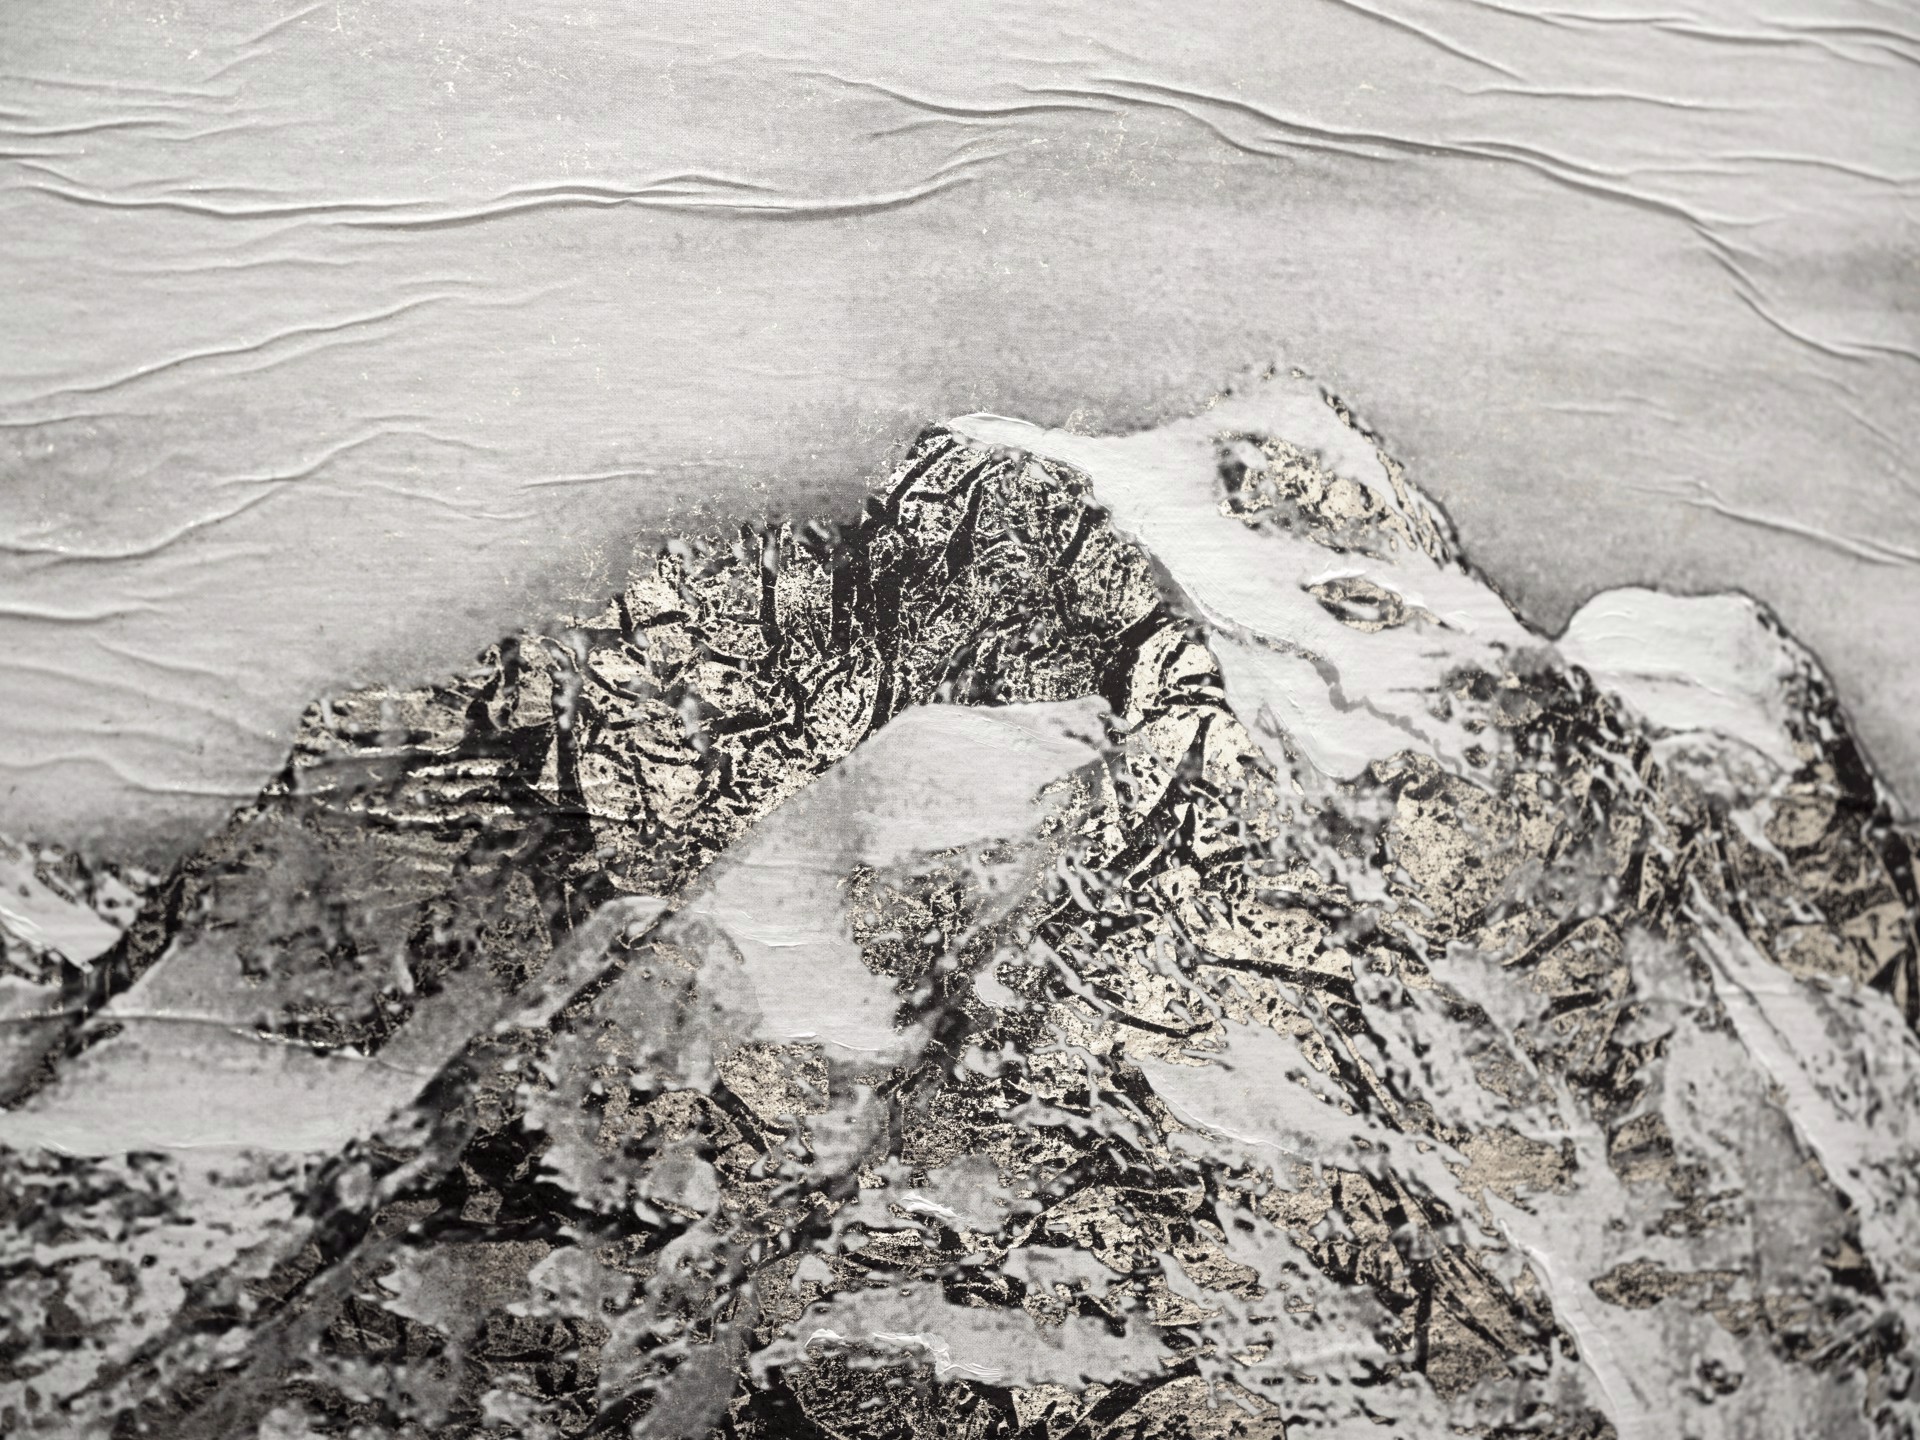 Jungfrau by Bill Claps